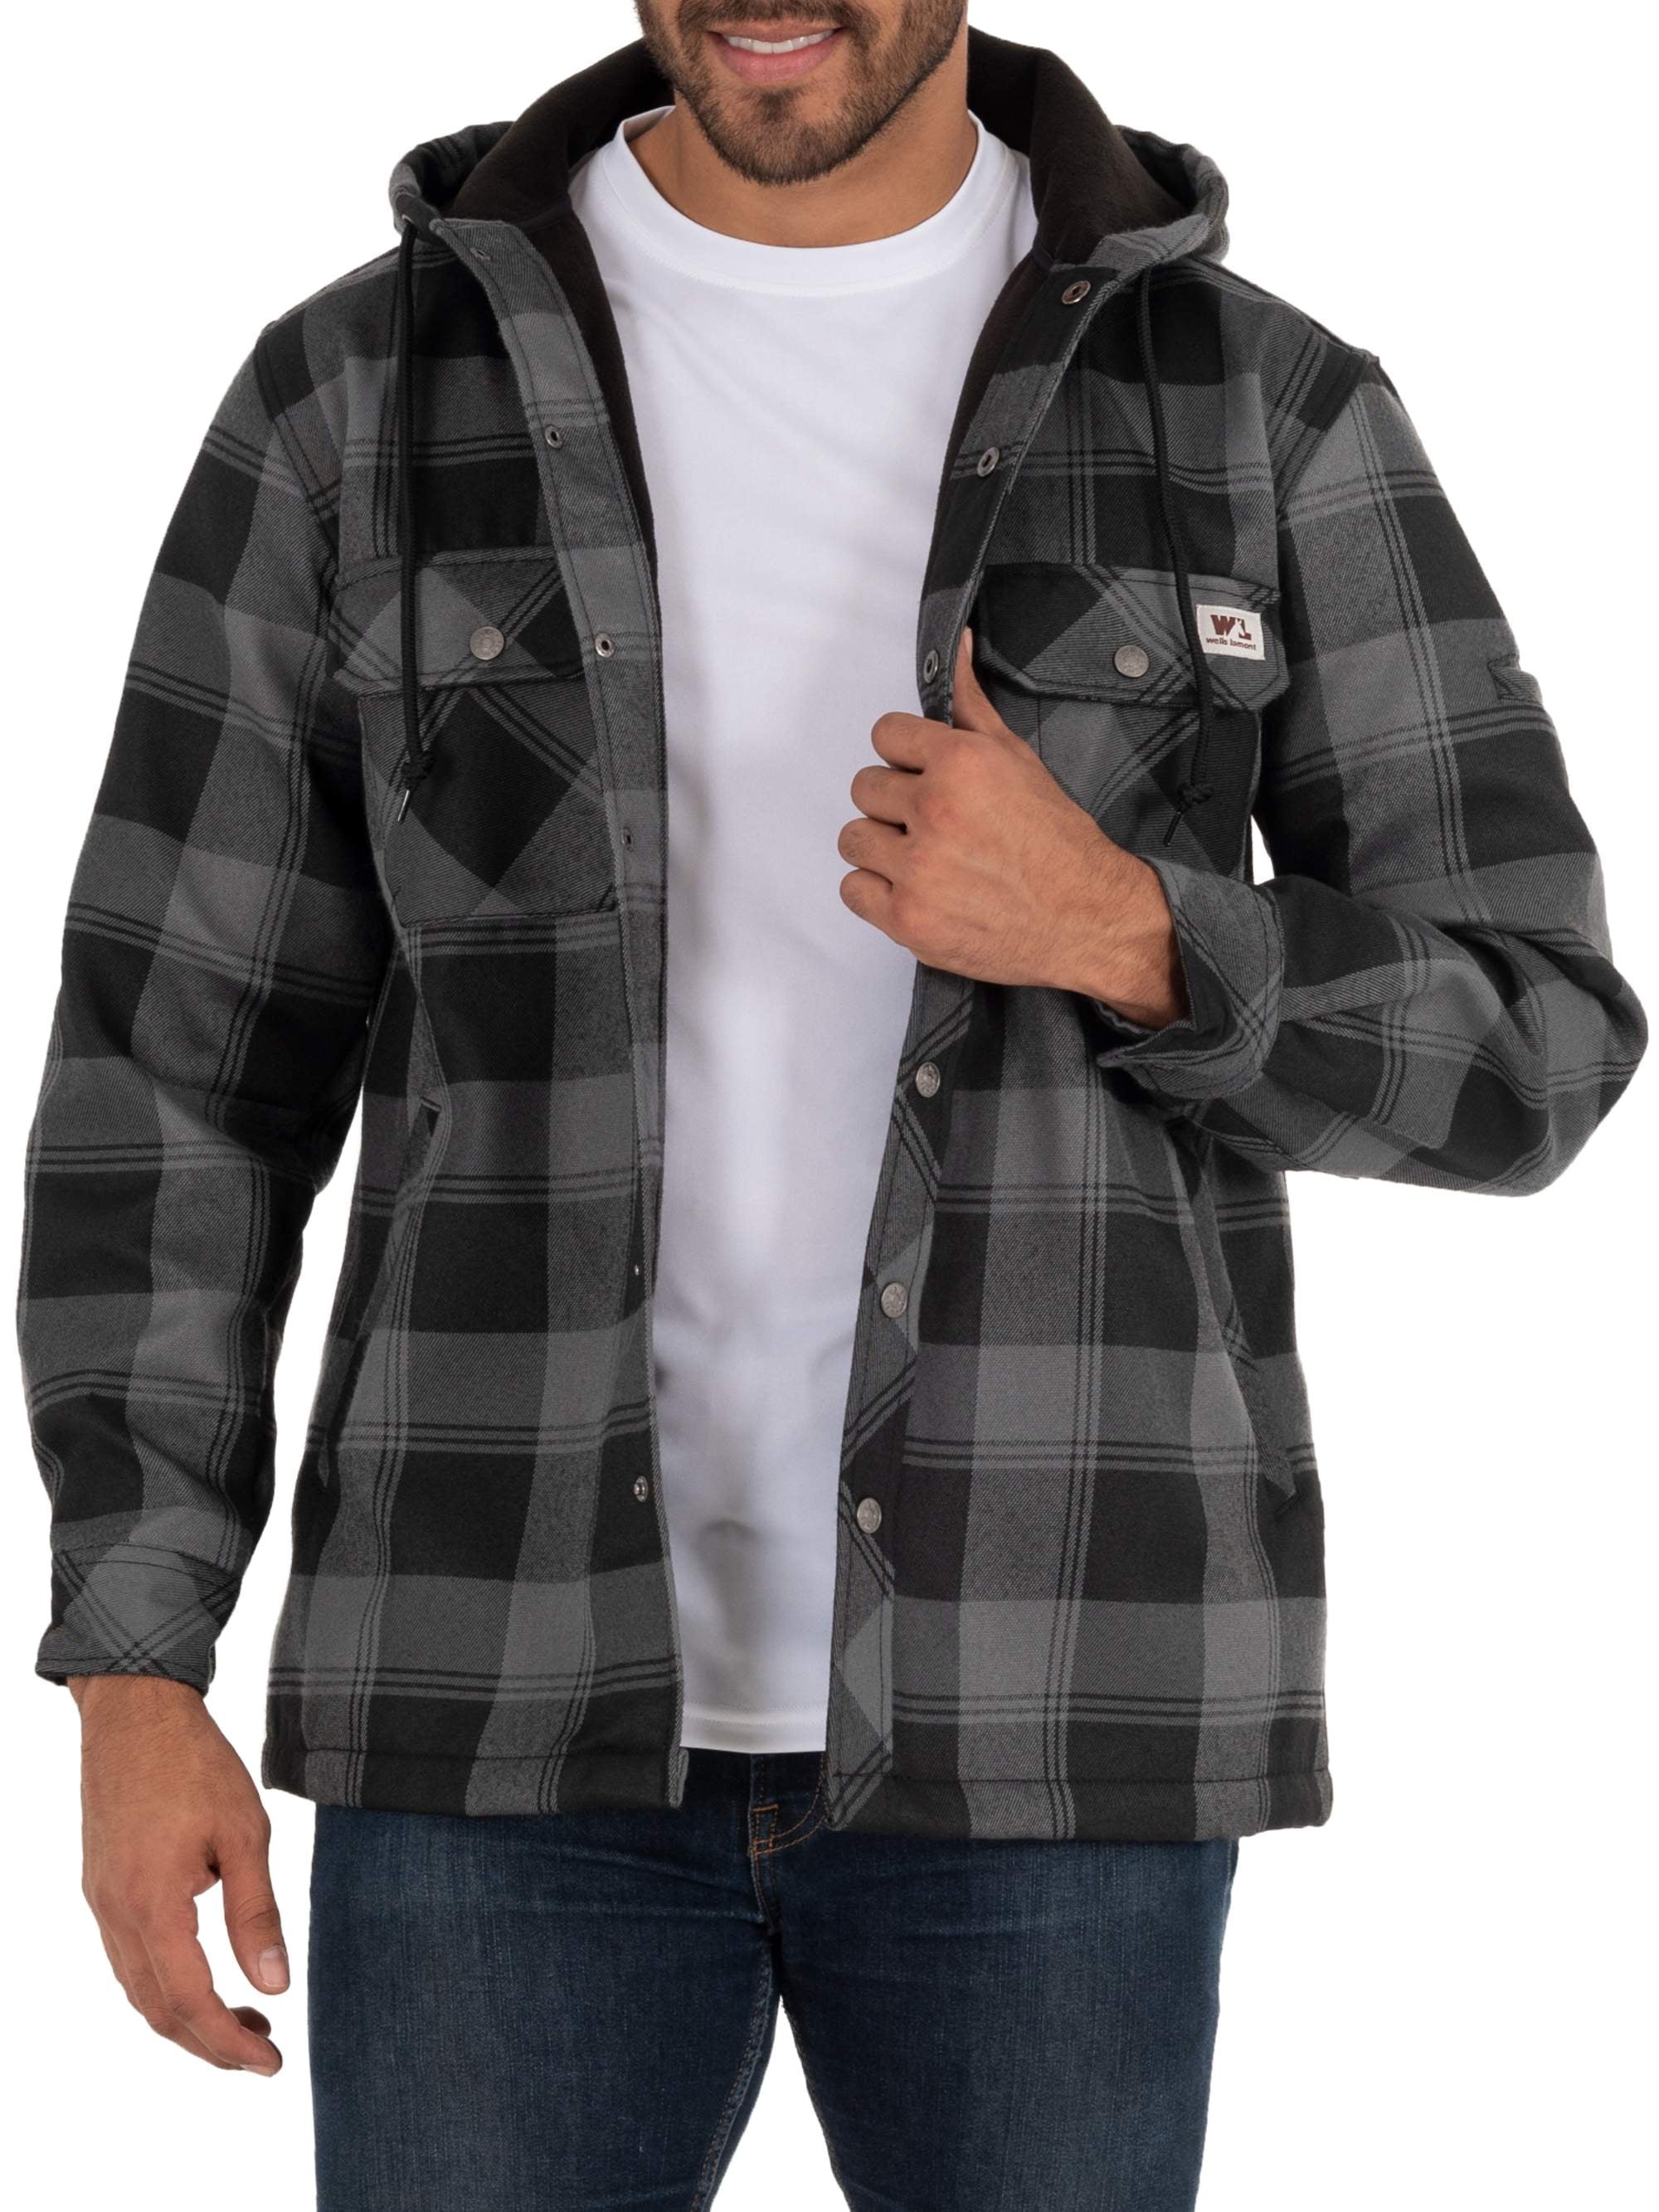 Wells Lamont Plaid Polar Fleece Lined Shirt Jacket - Walmart.com